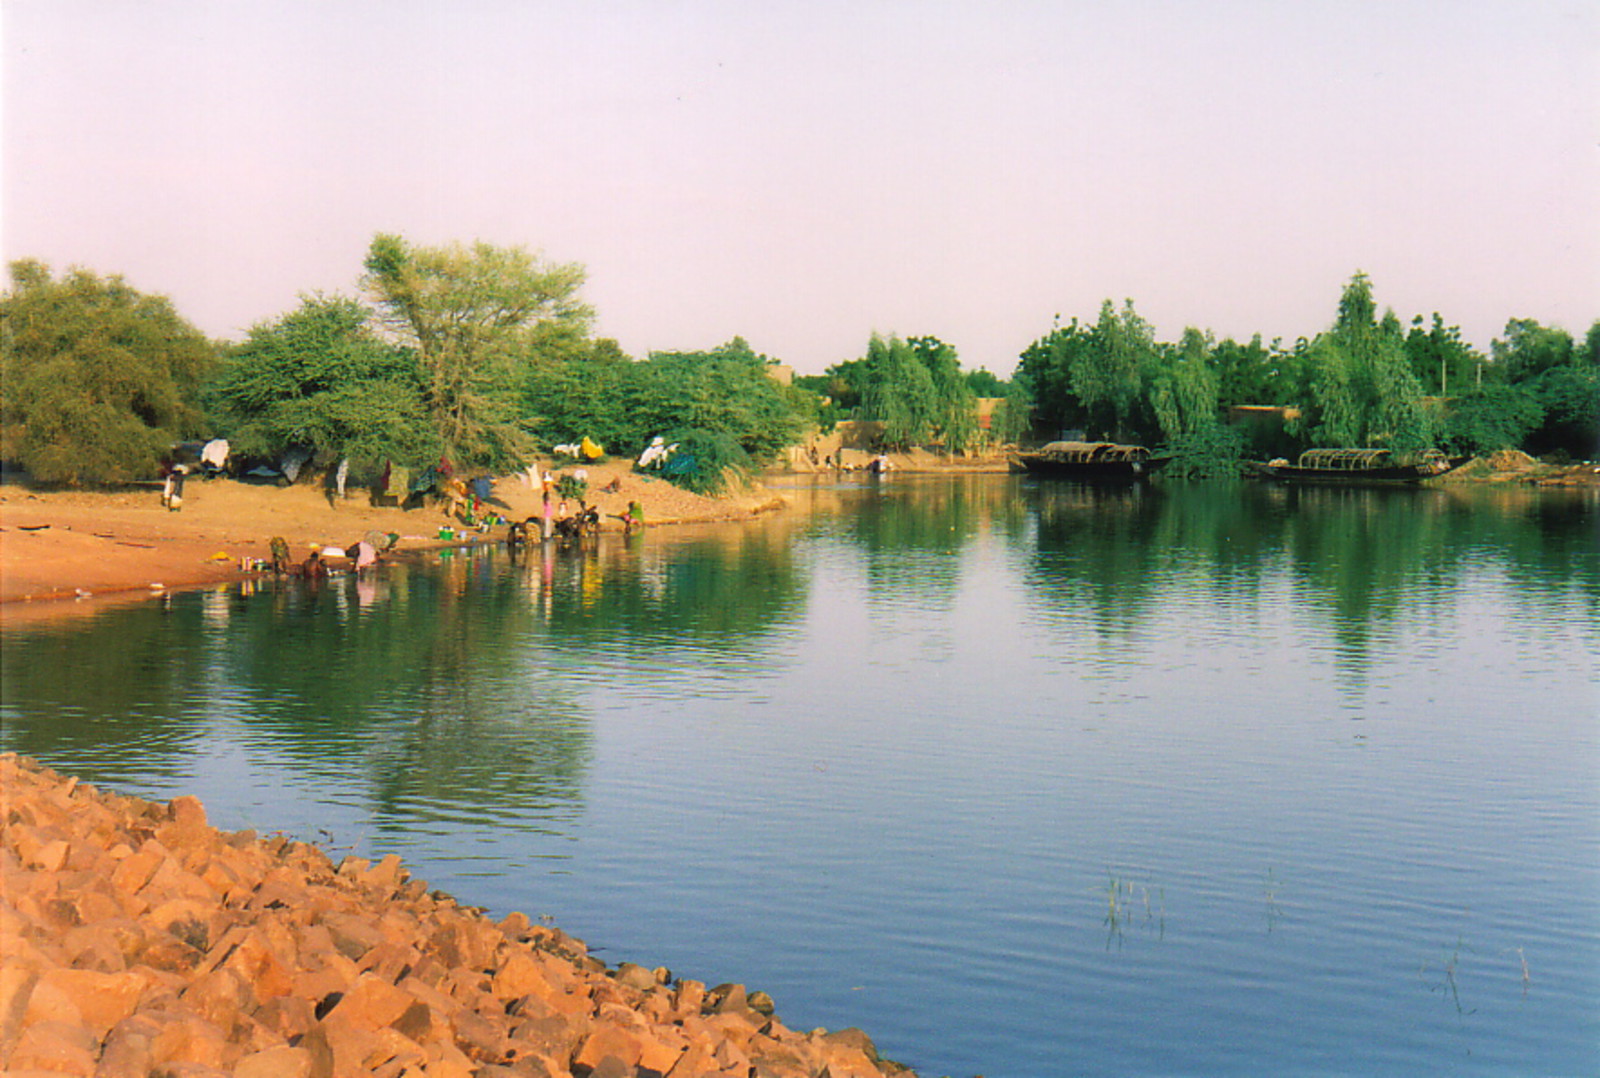 The River Niger near Tonka